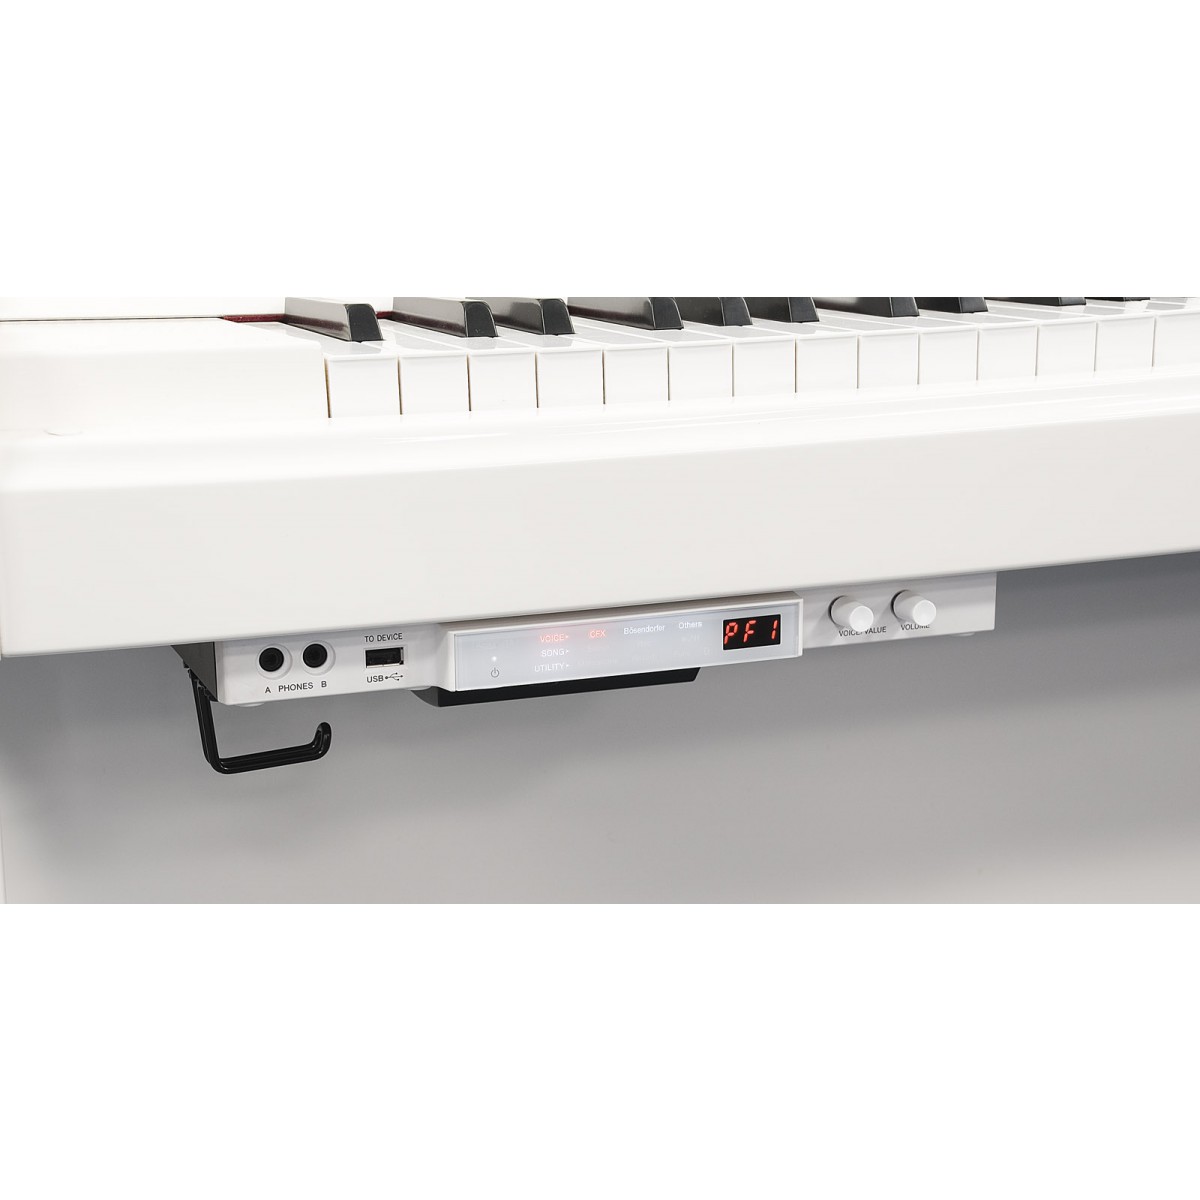 Yamaha B2 TC3 Silent Piano PWH - Weiß Hochglanz, Ansicht Silent System